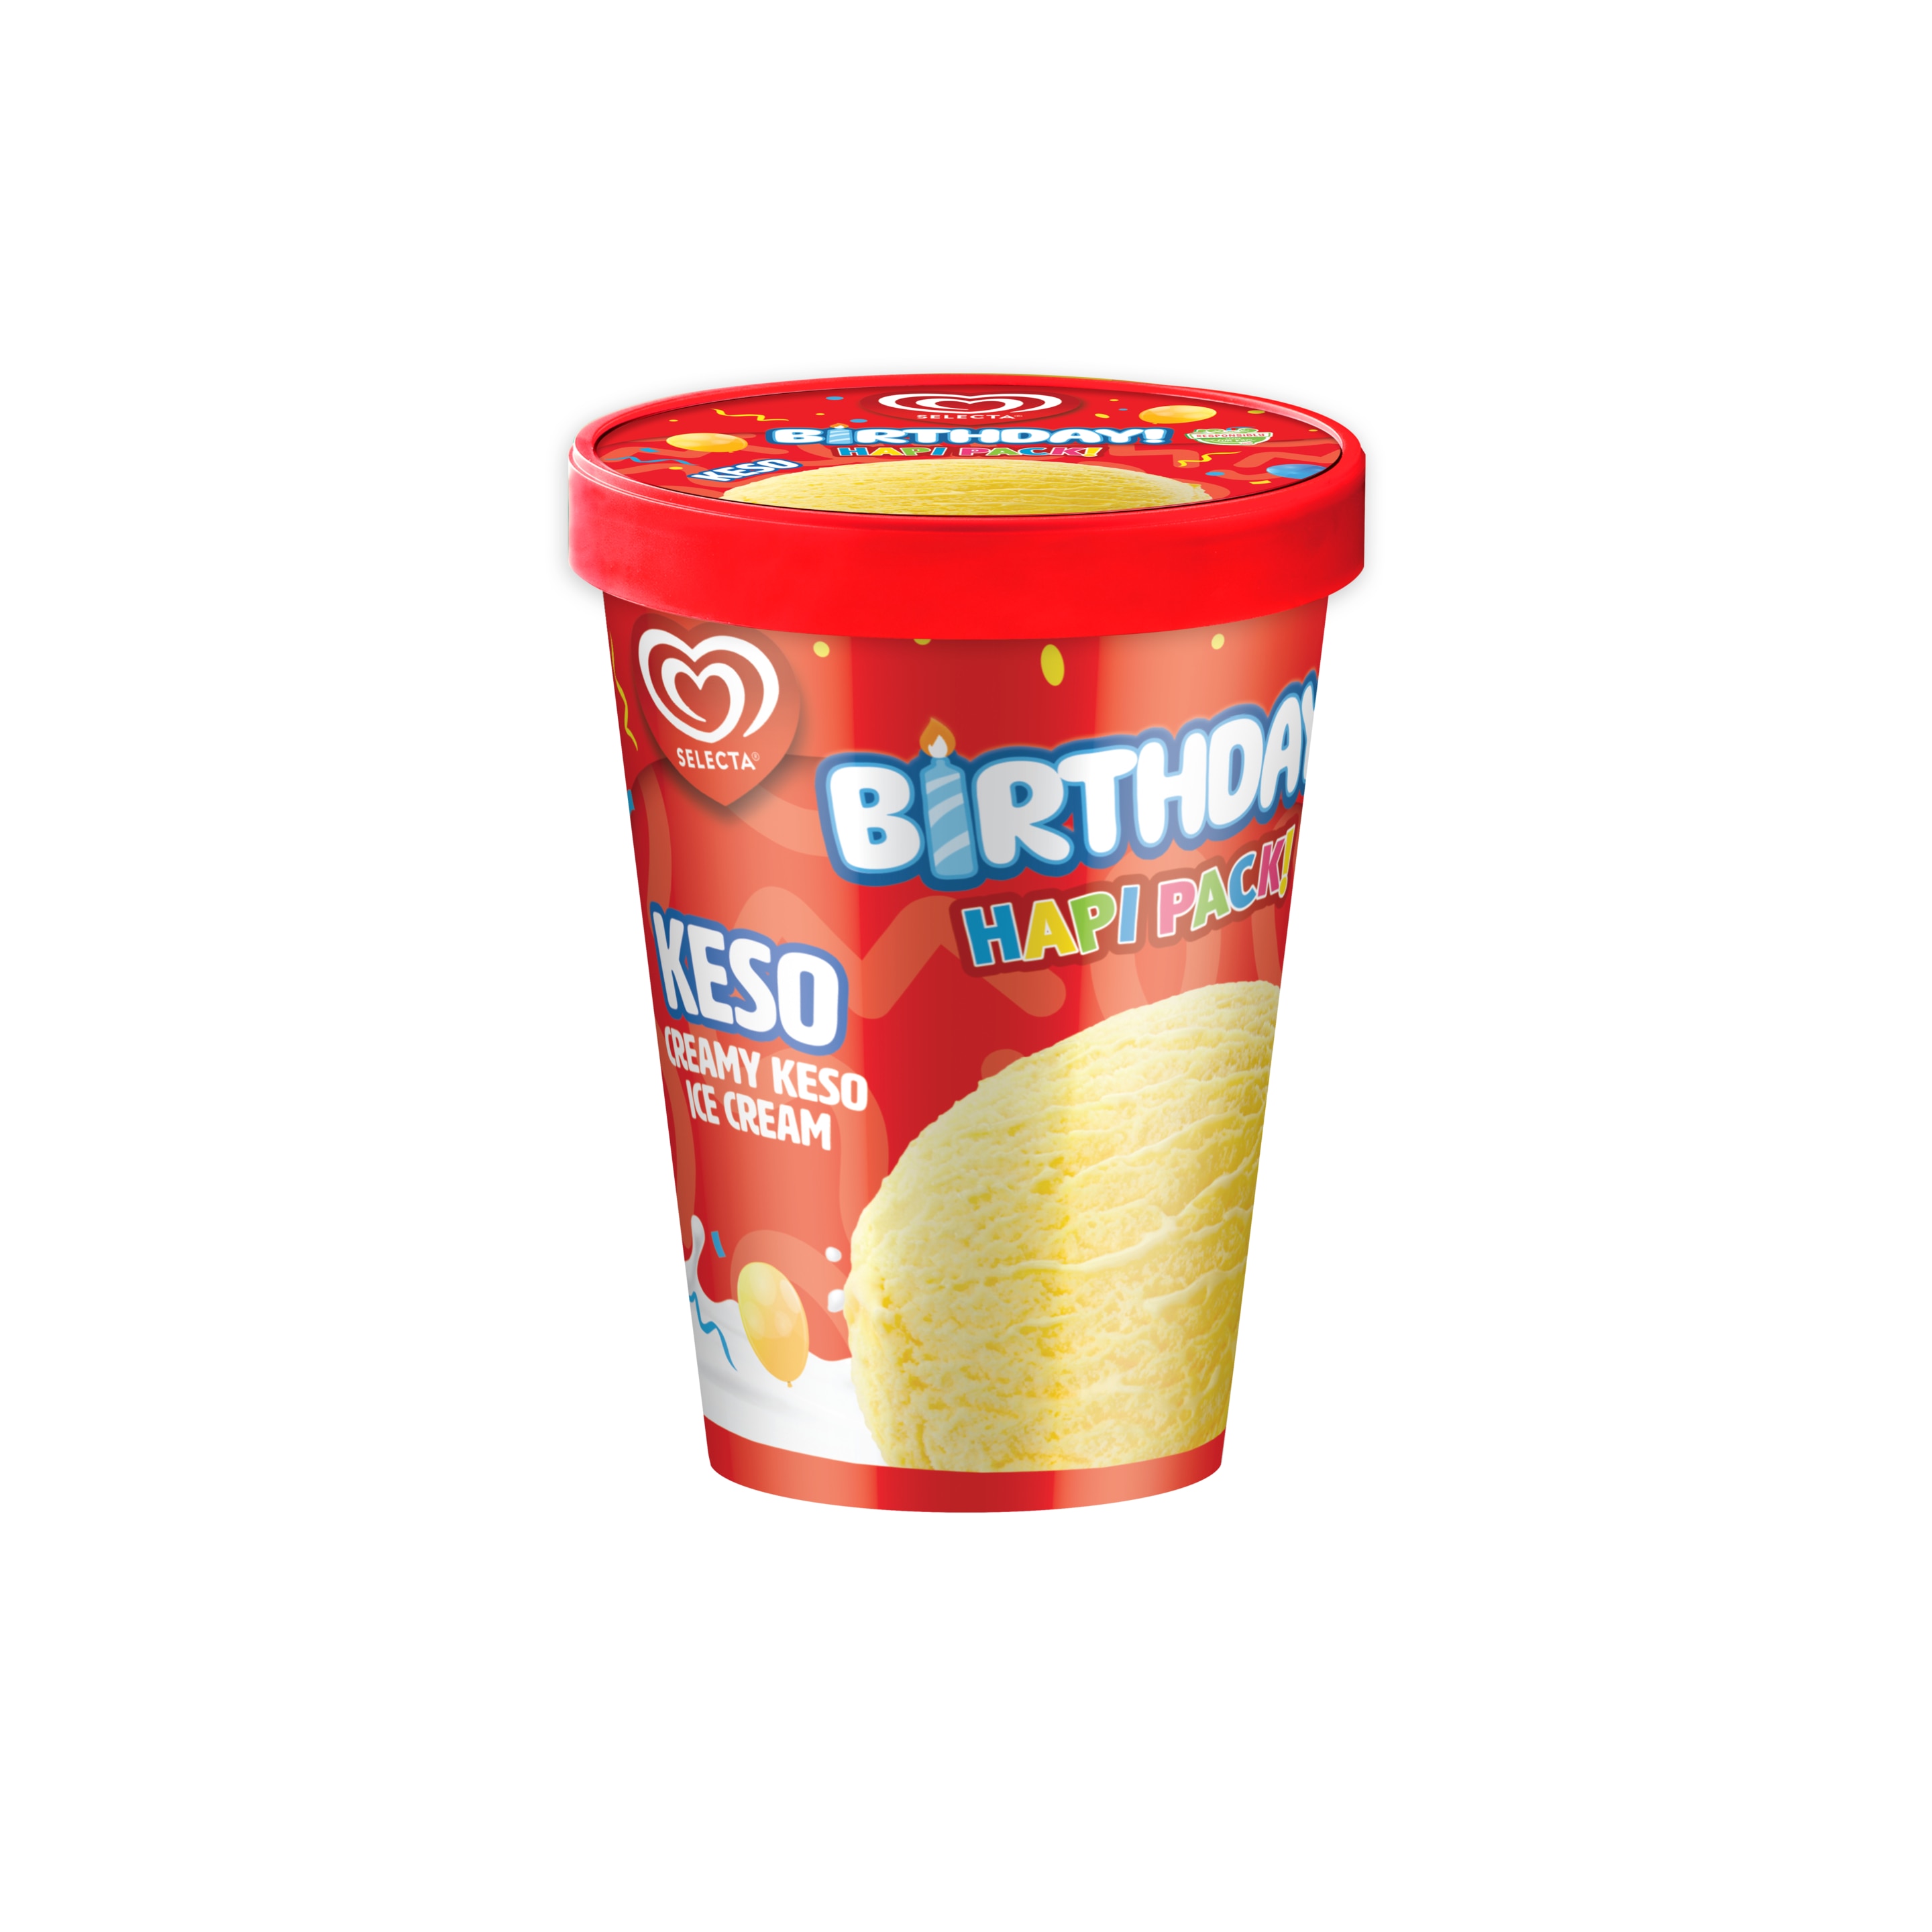 Selecta Creamdae Keso Hapi Pack